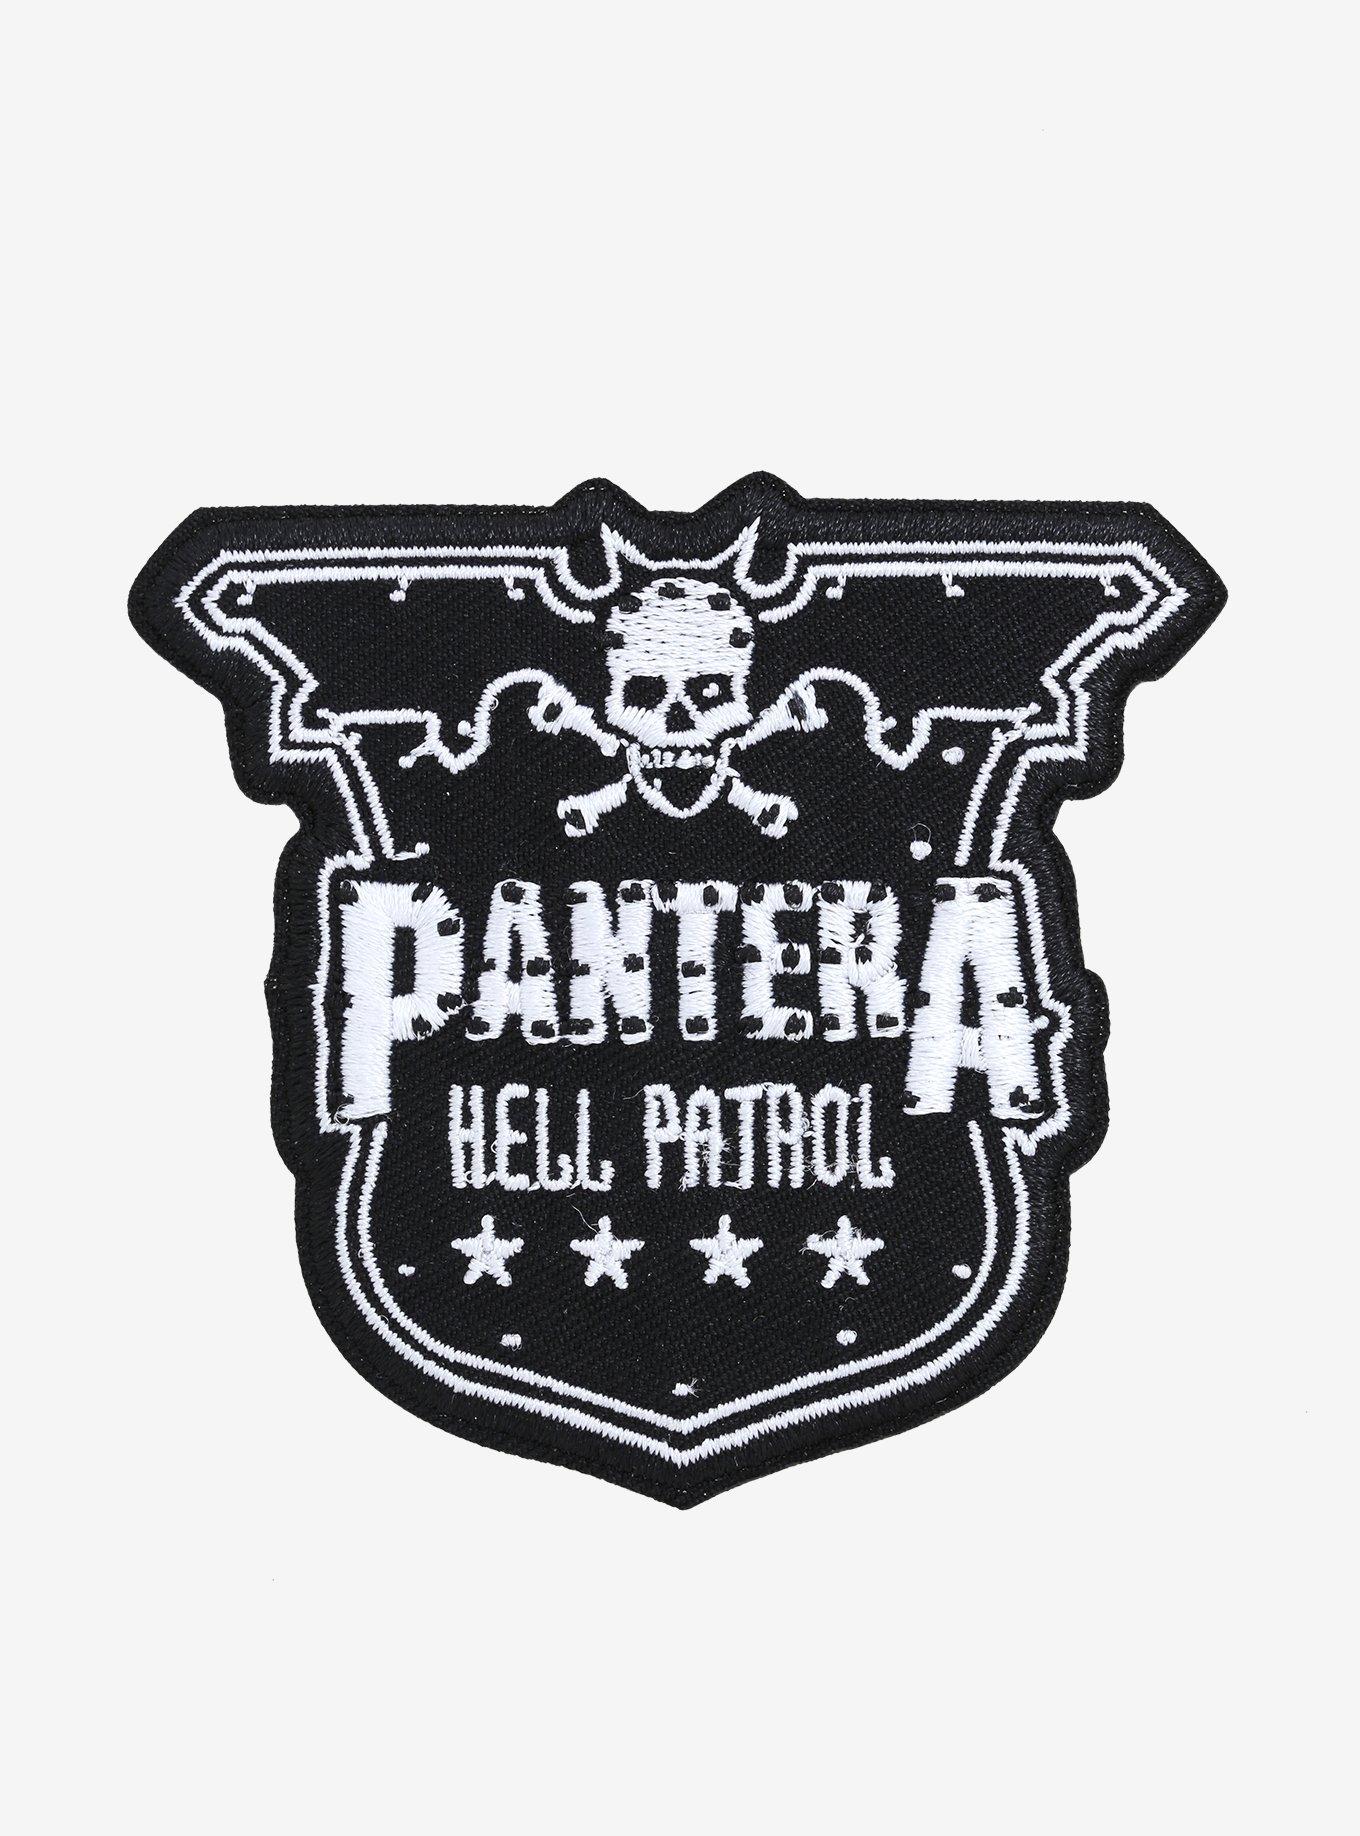 Pantera Hell Patrol Patch | Hot Topic